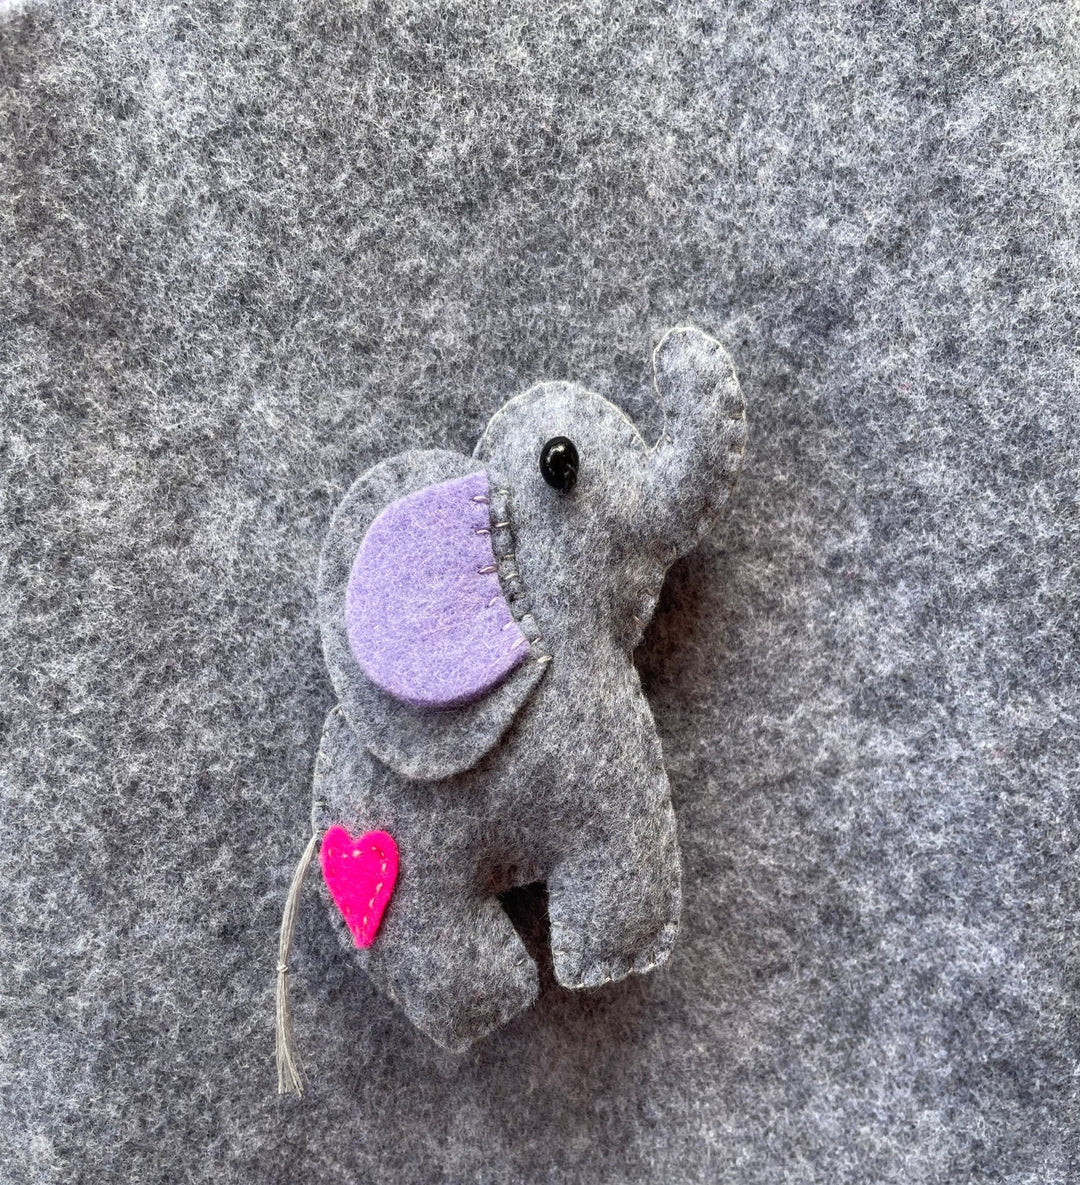 How to Make a Felt Elephant | DIY Craft Tutorial by FabricLA - FabricLA.com